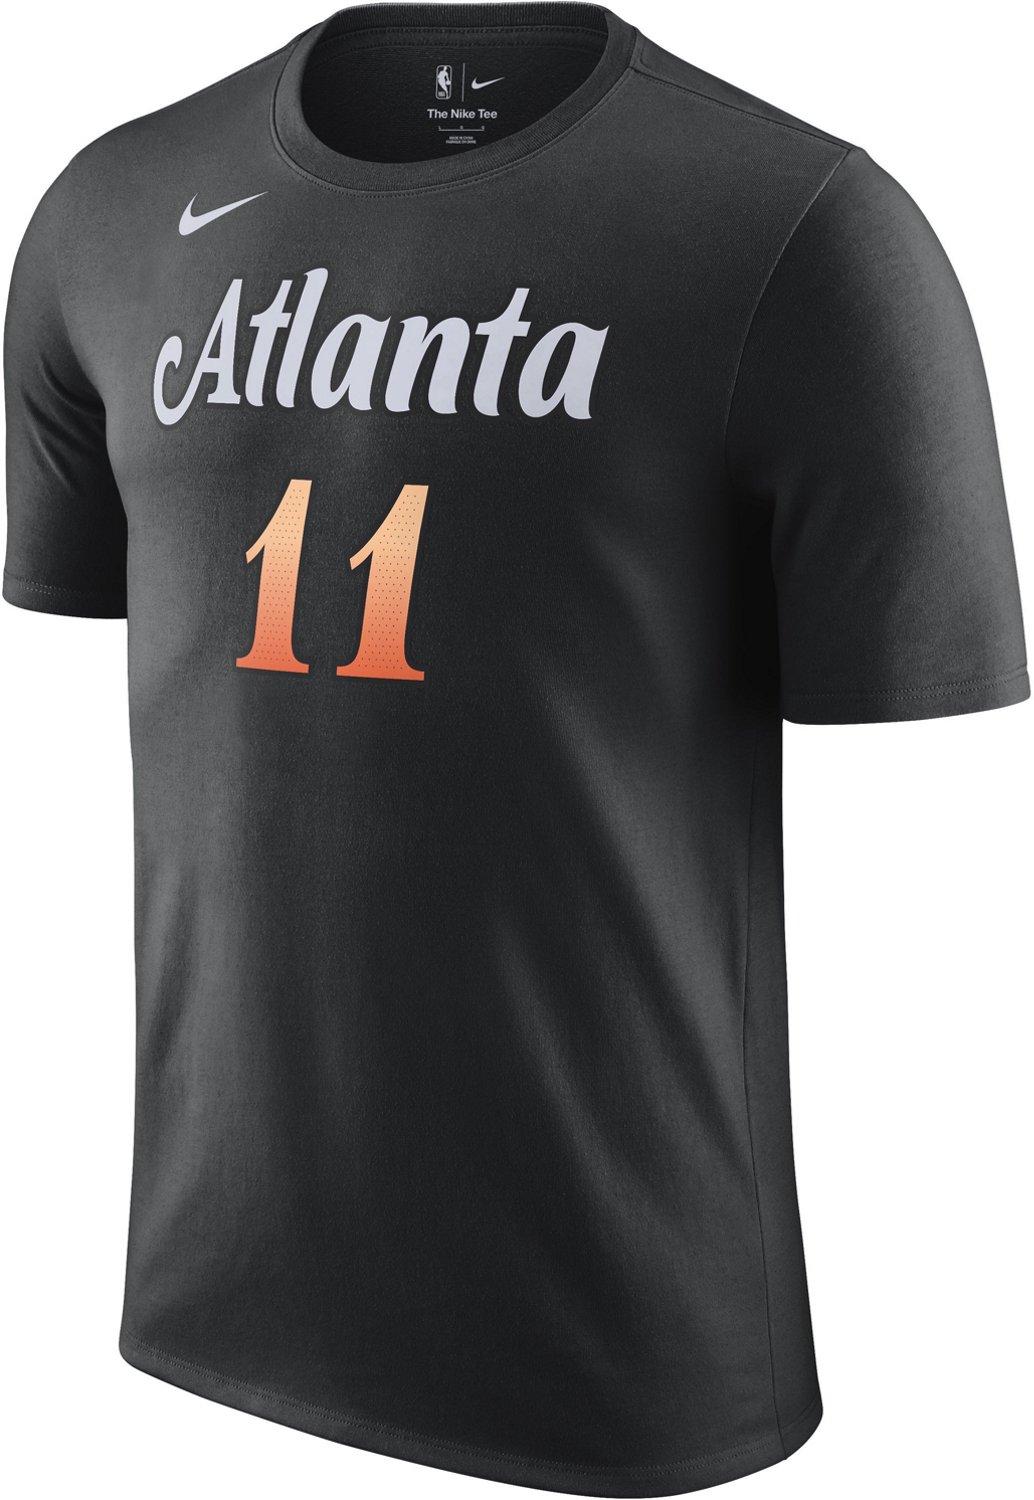 Shirts, Trae Young Shirt Atlanta Hawks Shirt Atlanta Hawks Unisex T Shirt